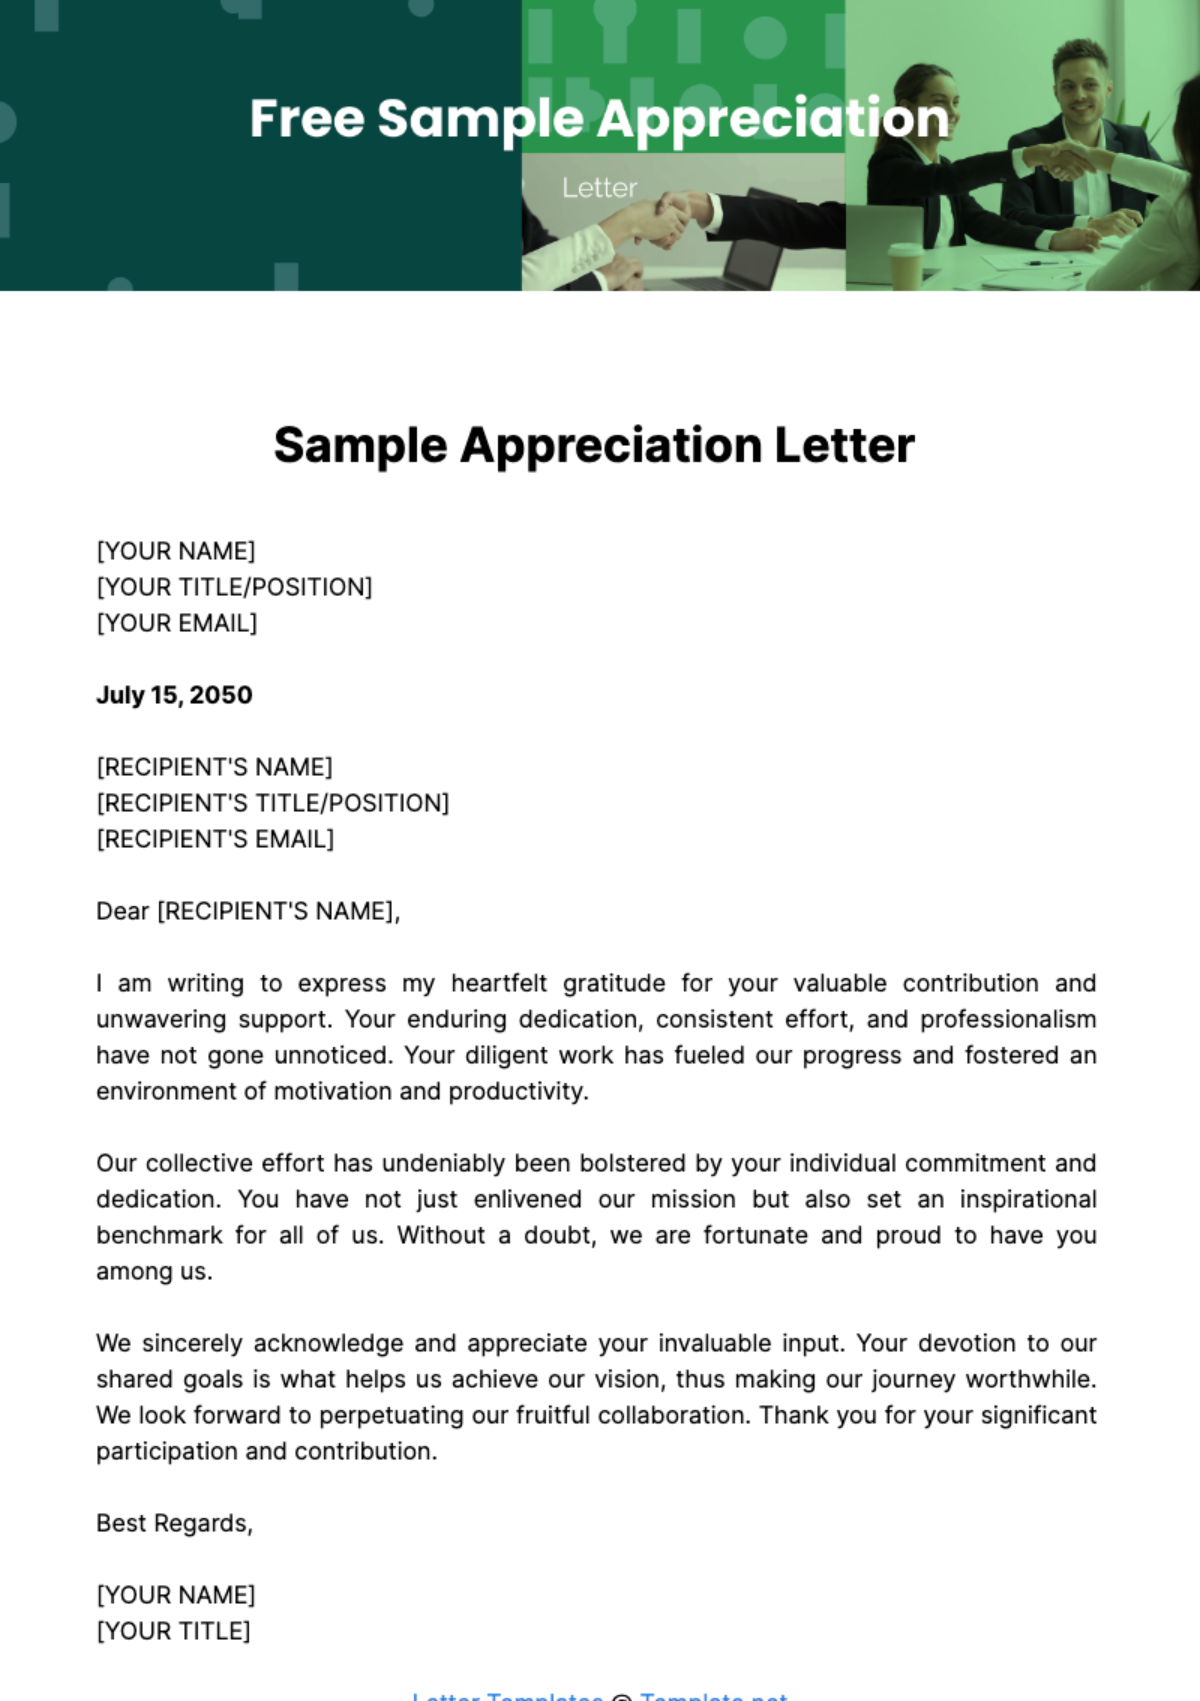 Free Sample Appreciation Letter Template